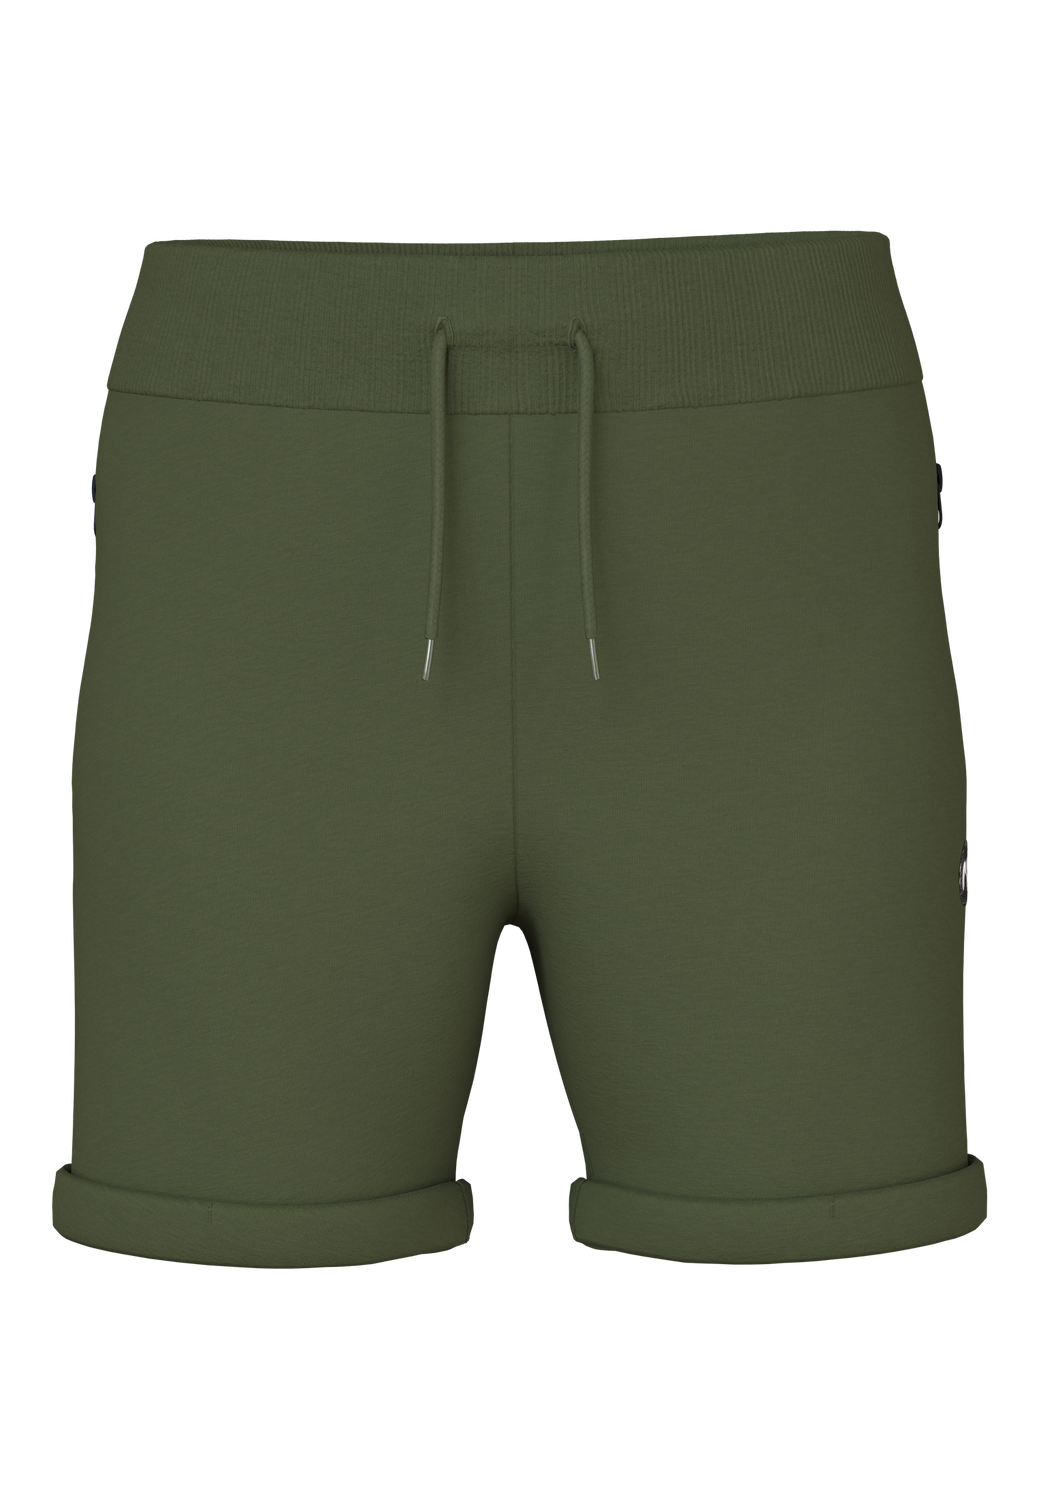 NKMVIMO Shorts - Rifle Green